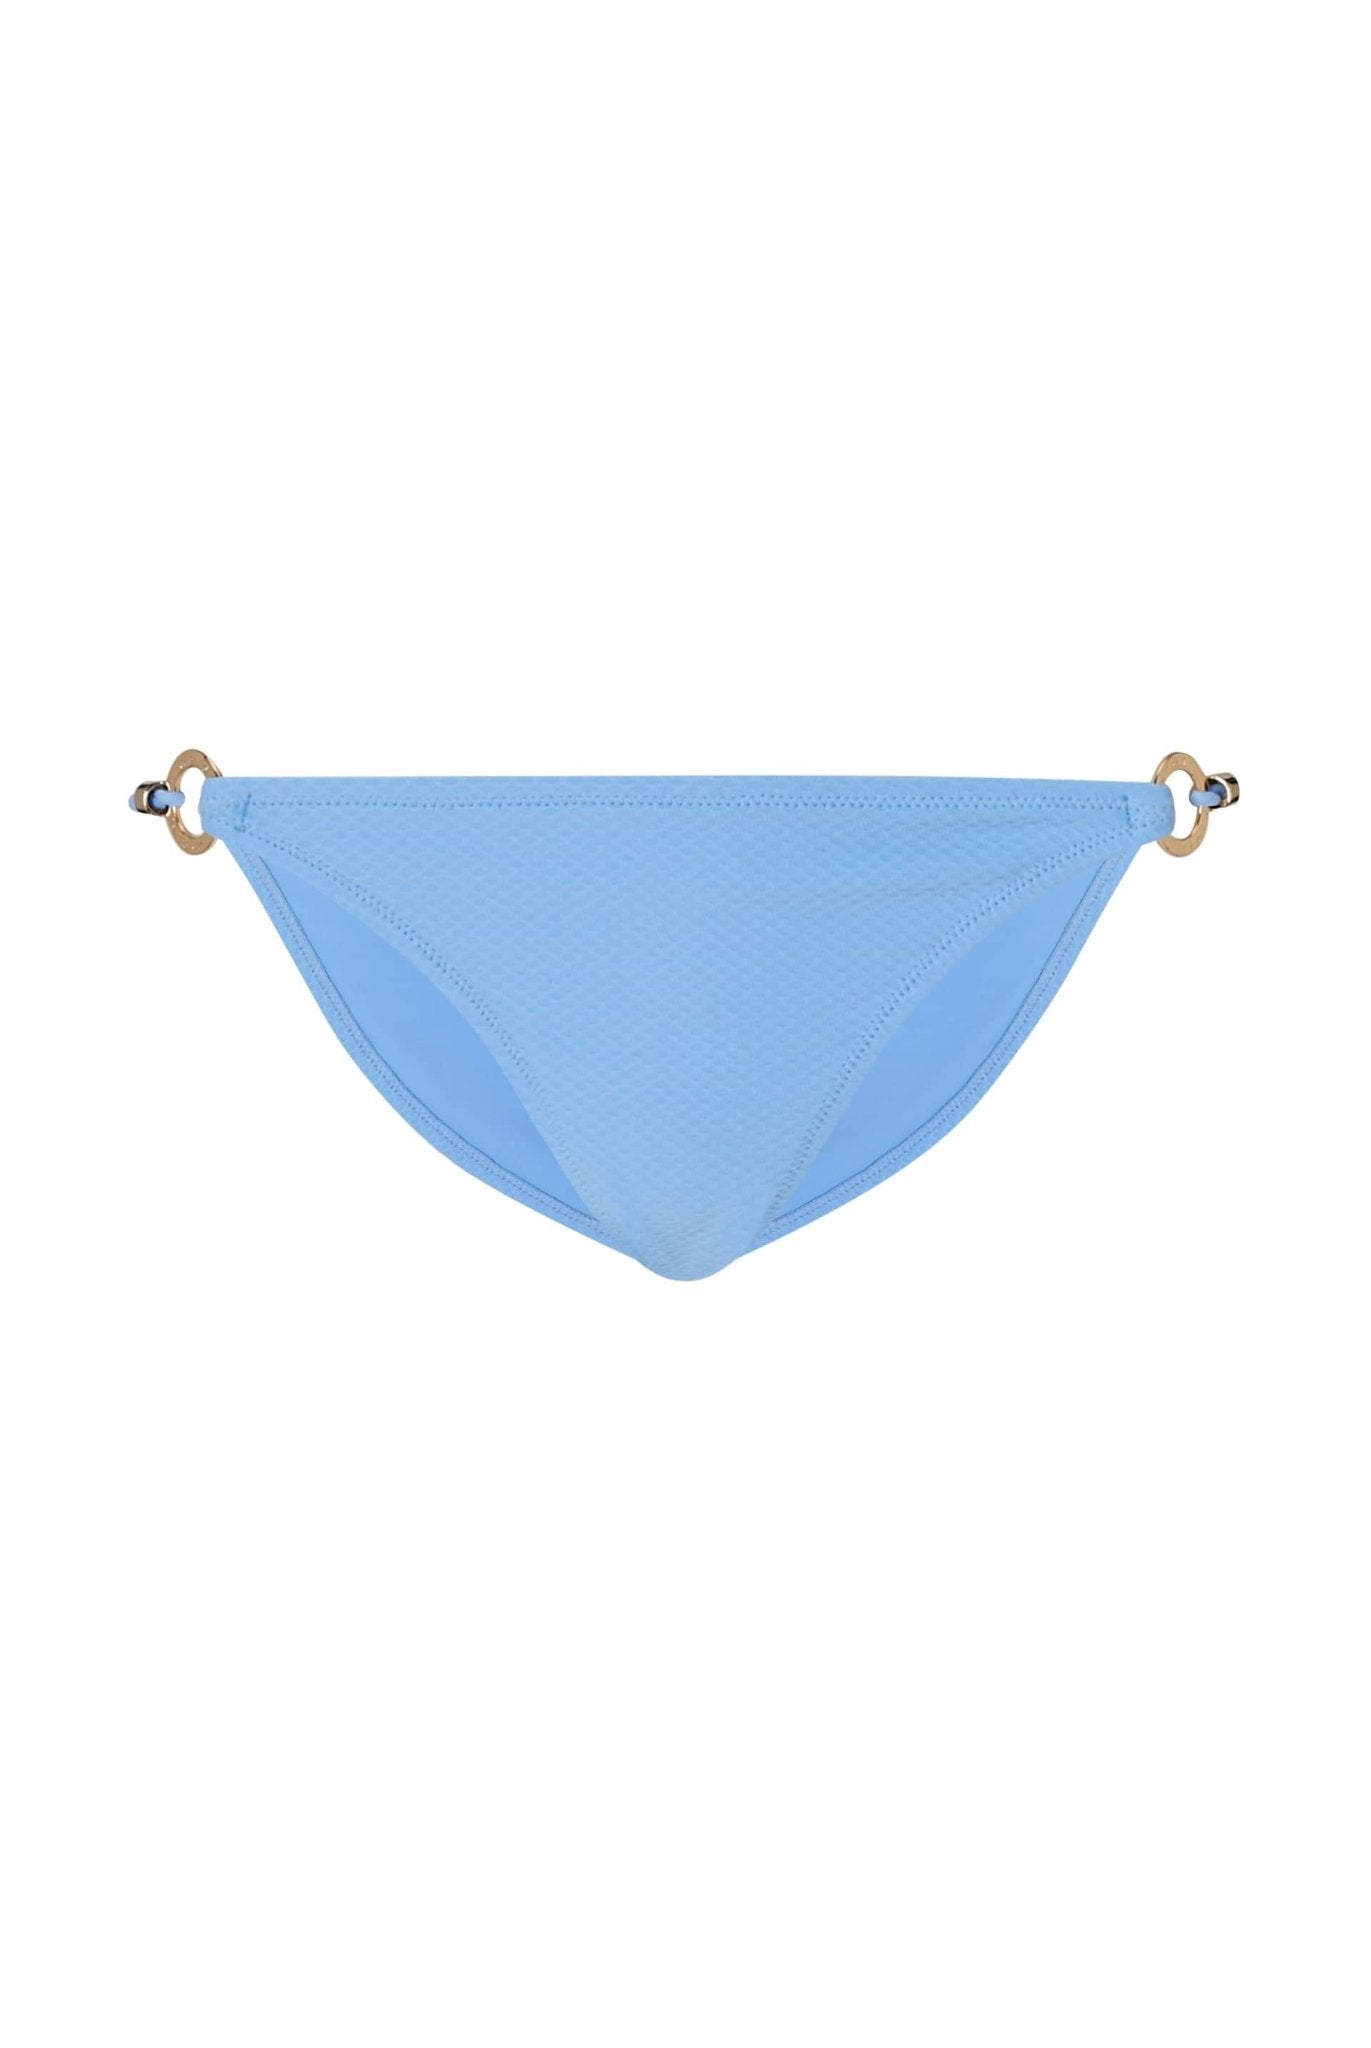 Core Ring Triangle Bikini Bottom in Ocean Tide - Heidi Klein - UK Store